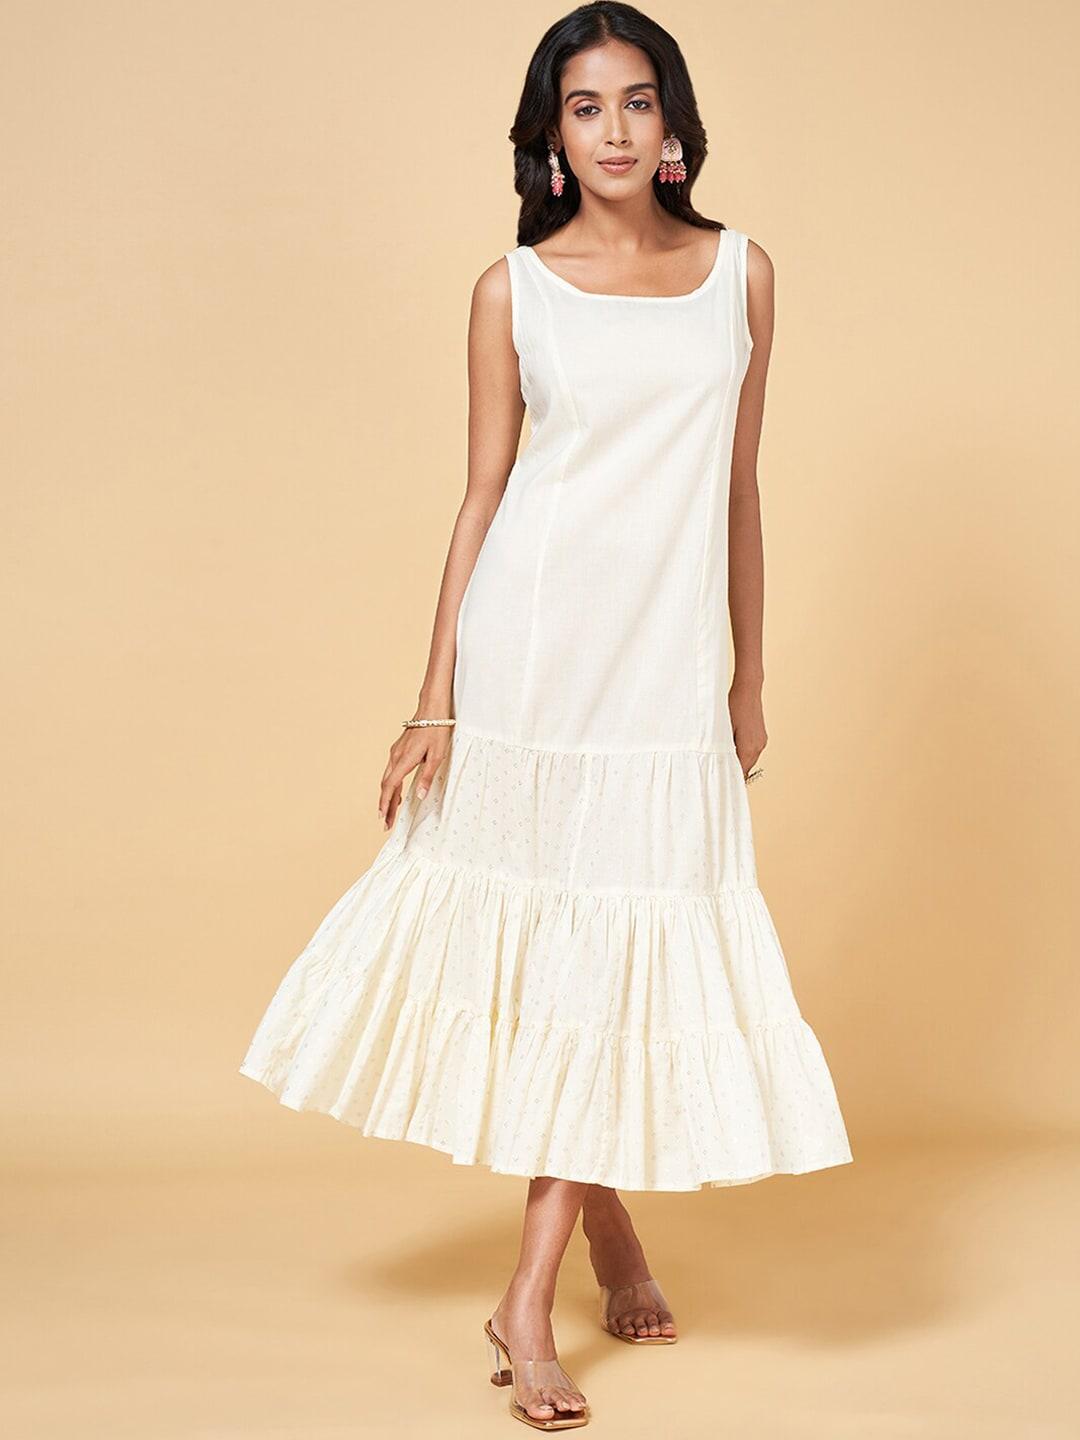 rangmanch by pantaloons off white a-line maxi dress